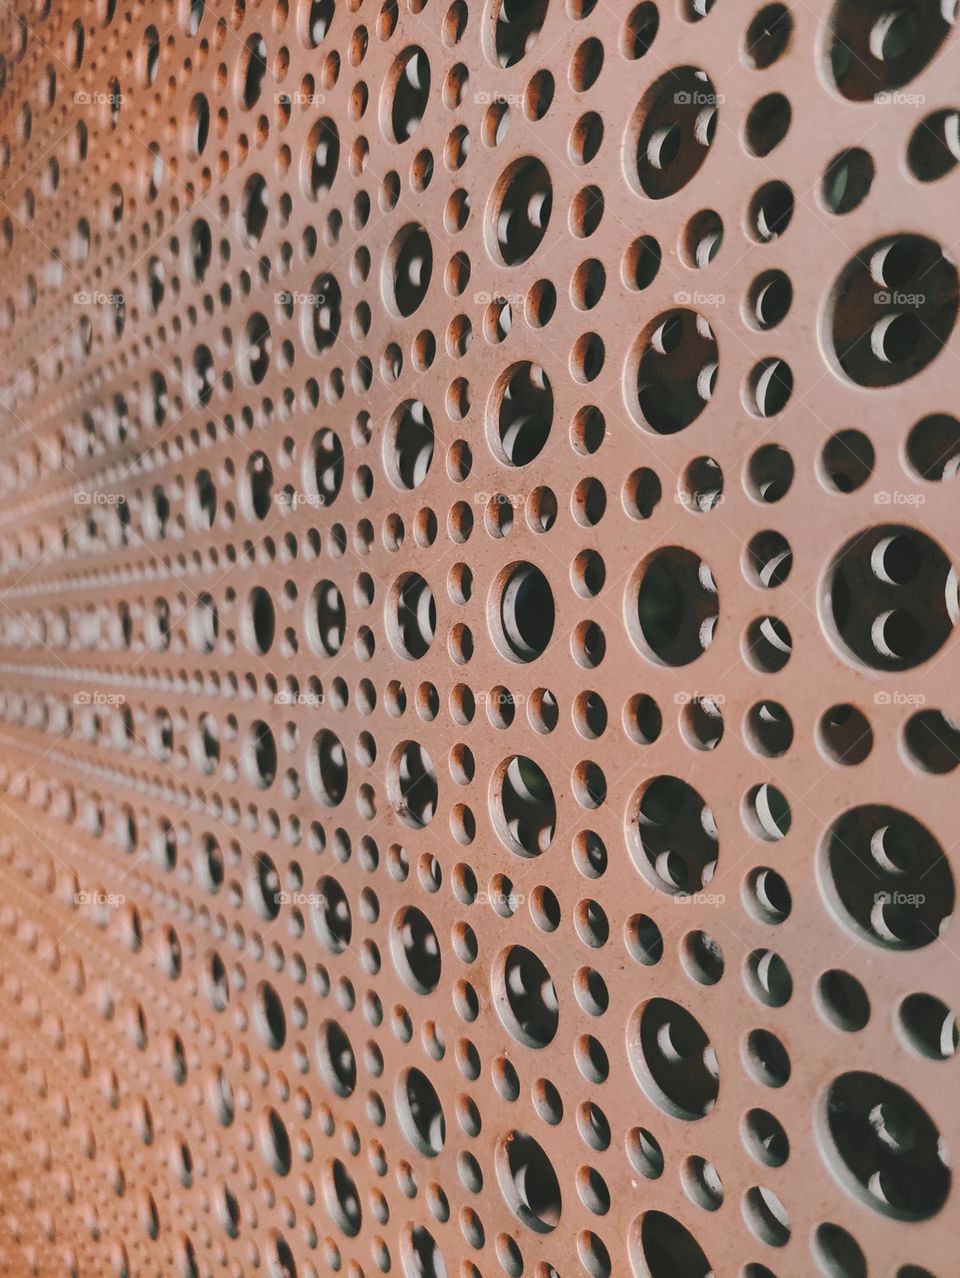 (Polka Dot World) Dot pattern on metal fence ⚪⚪⚪⚪⚪